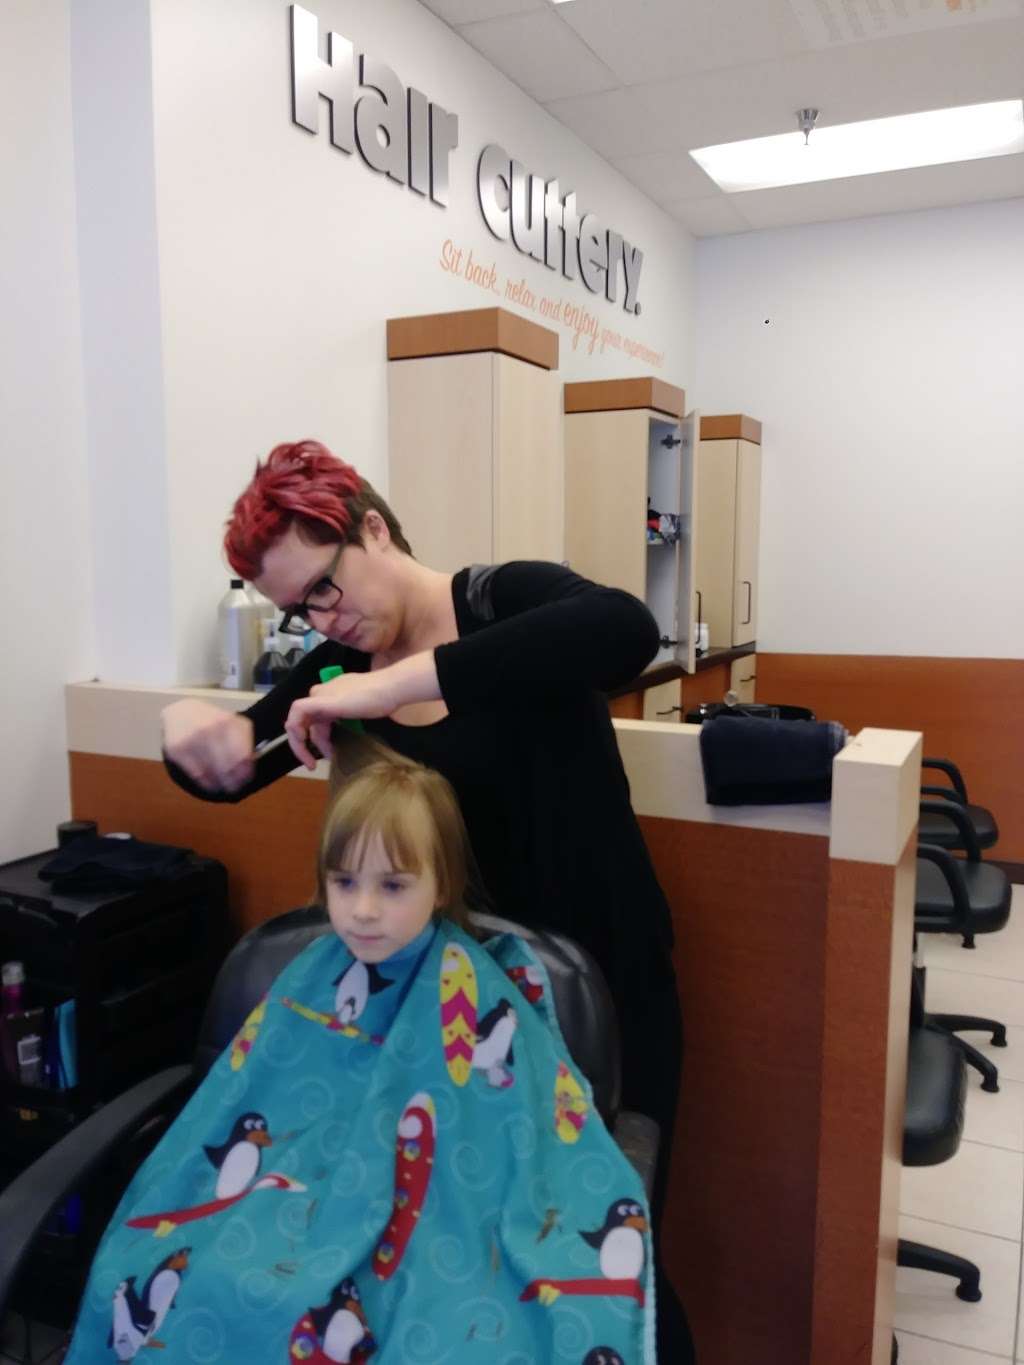 Hair Cuttery | 43 Town and Country Dr, Fredericksburg, VA 22405, USA | Phone: (540) 361-1878